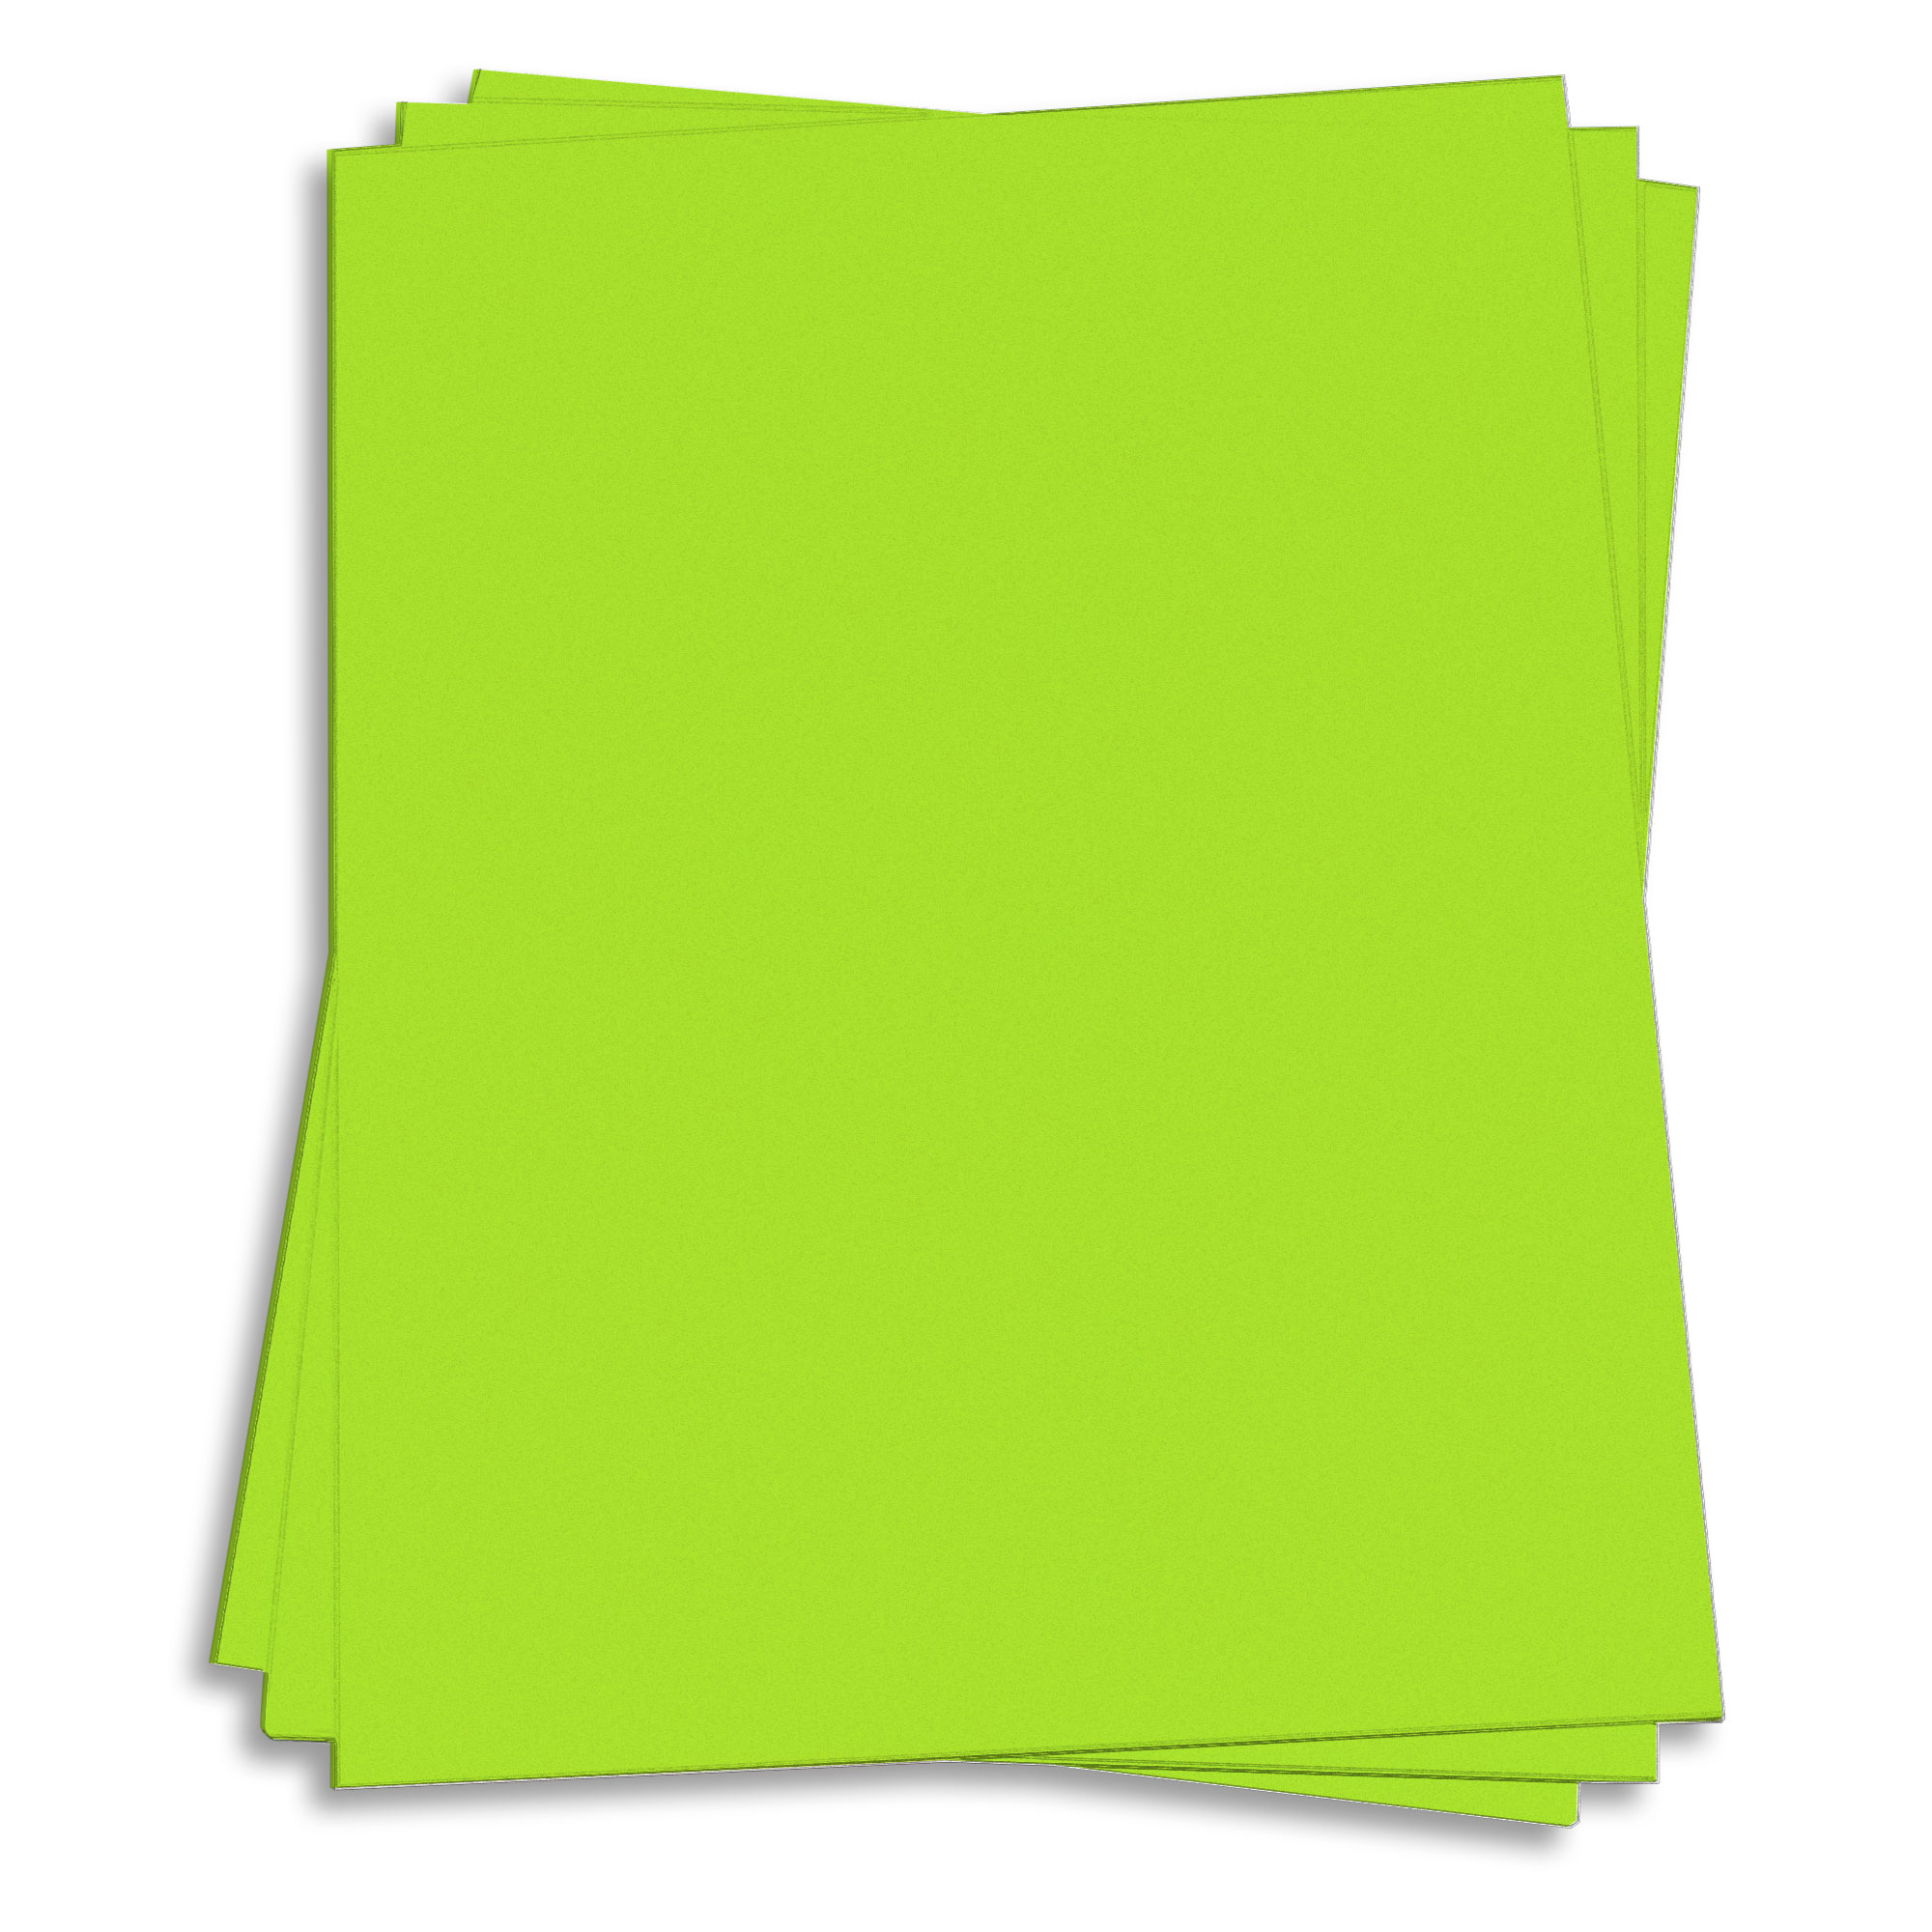 Vulcan Green Paper - 8 1/2 x 11 60lb Text